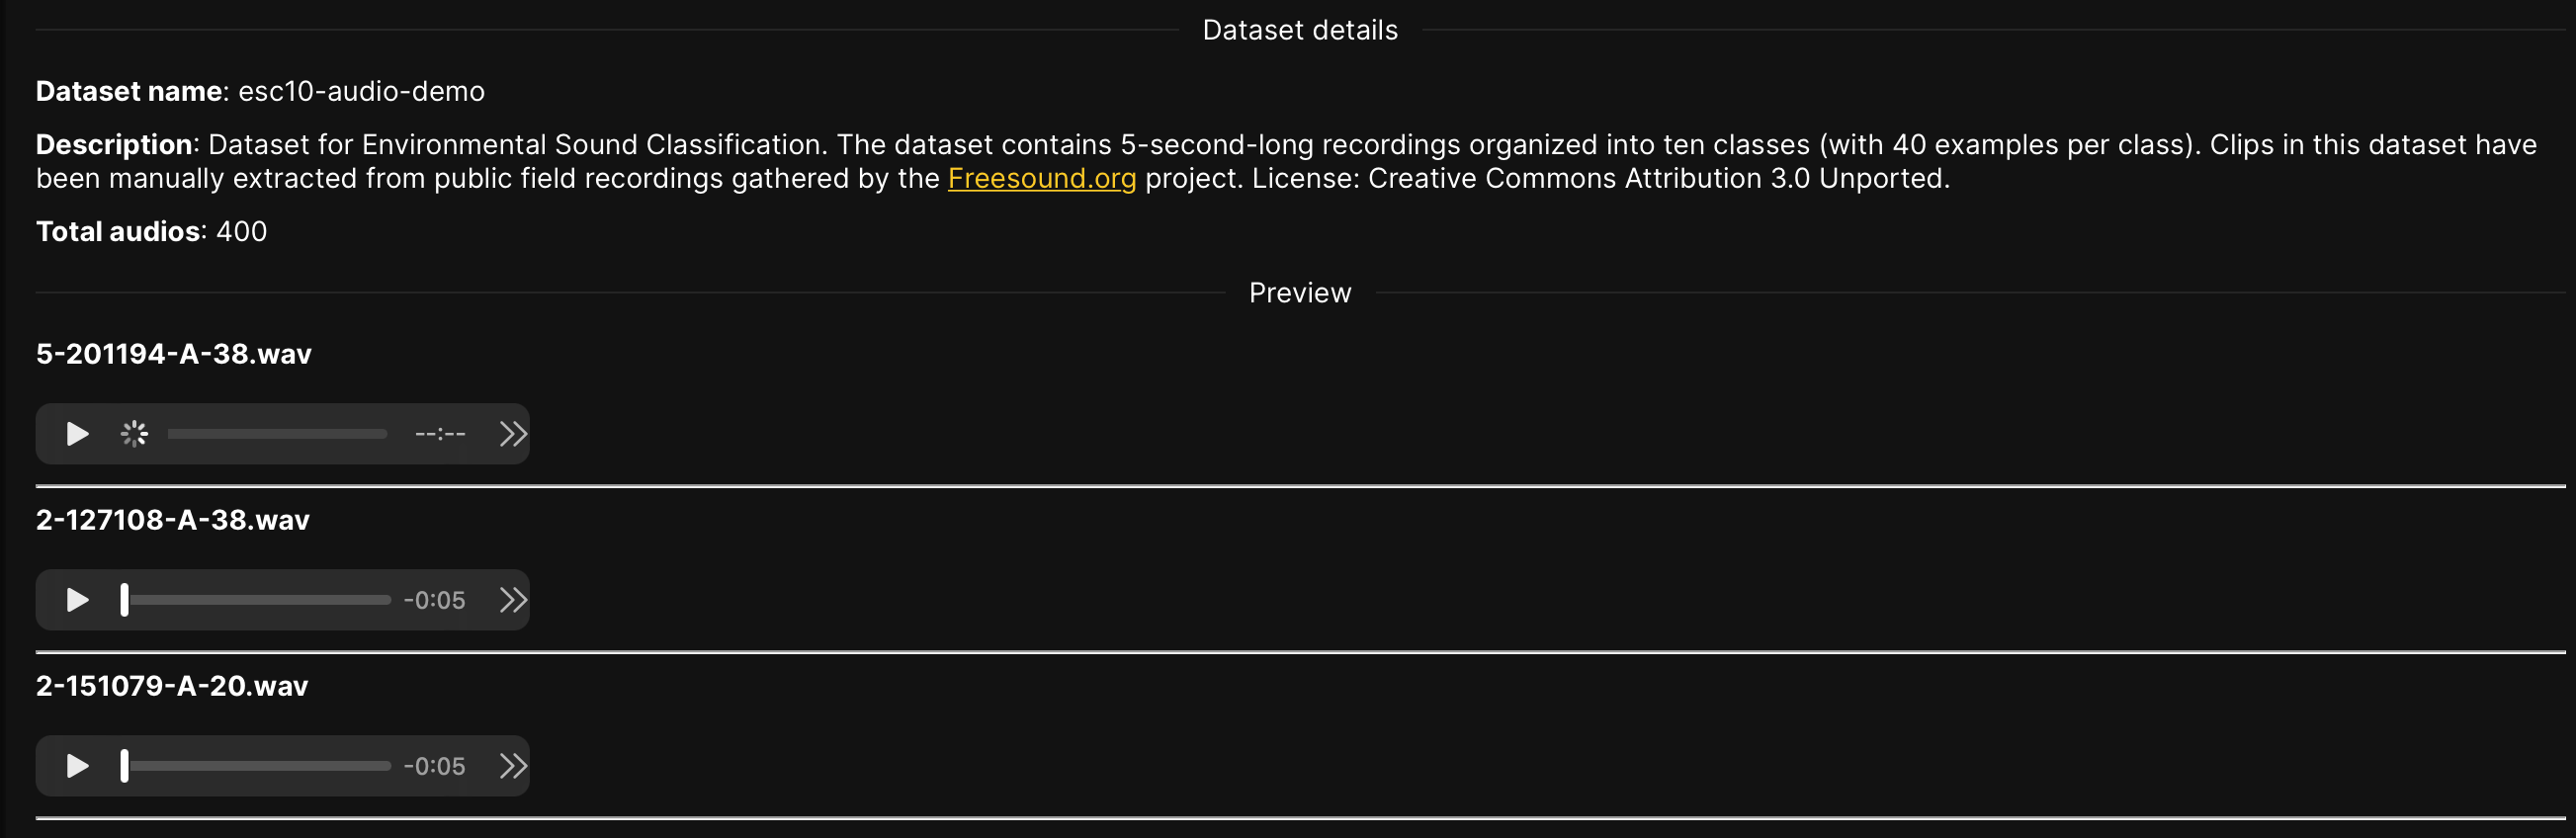 Dataset details esc10-audio-demo recordings of 5 seconds each